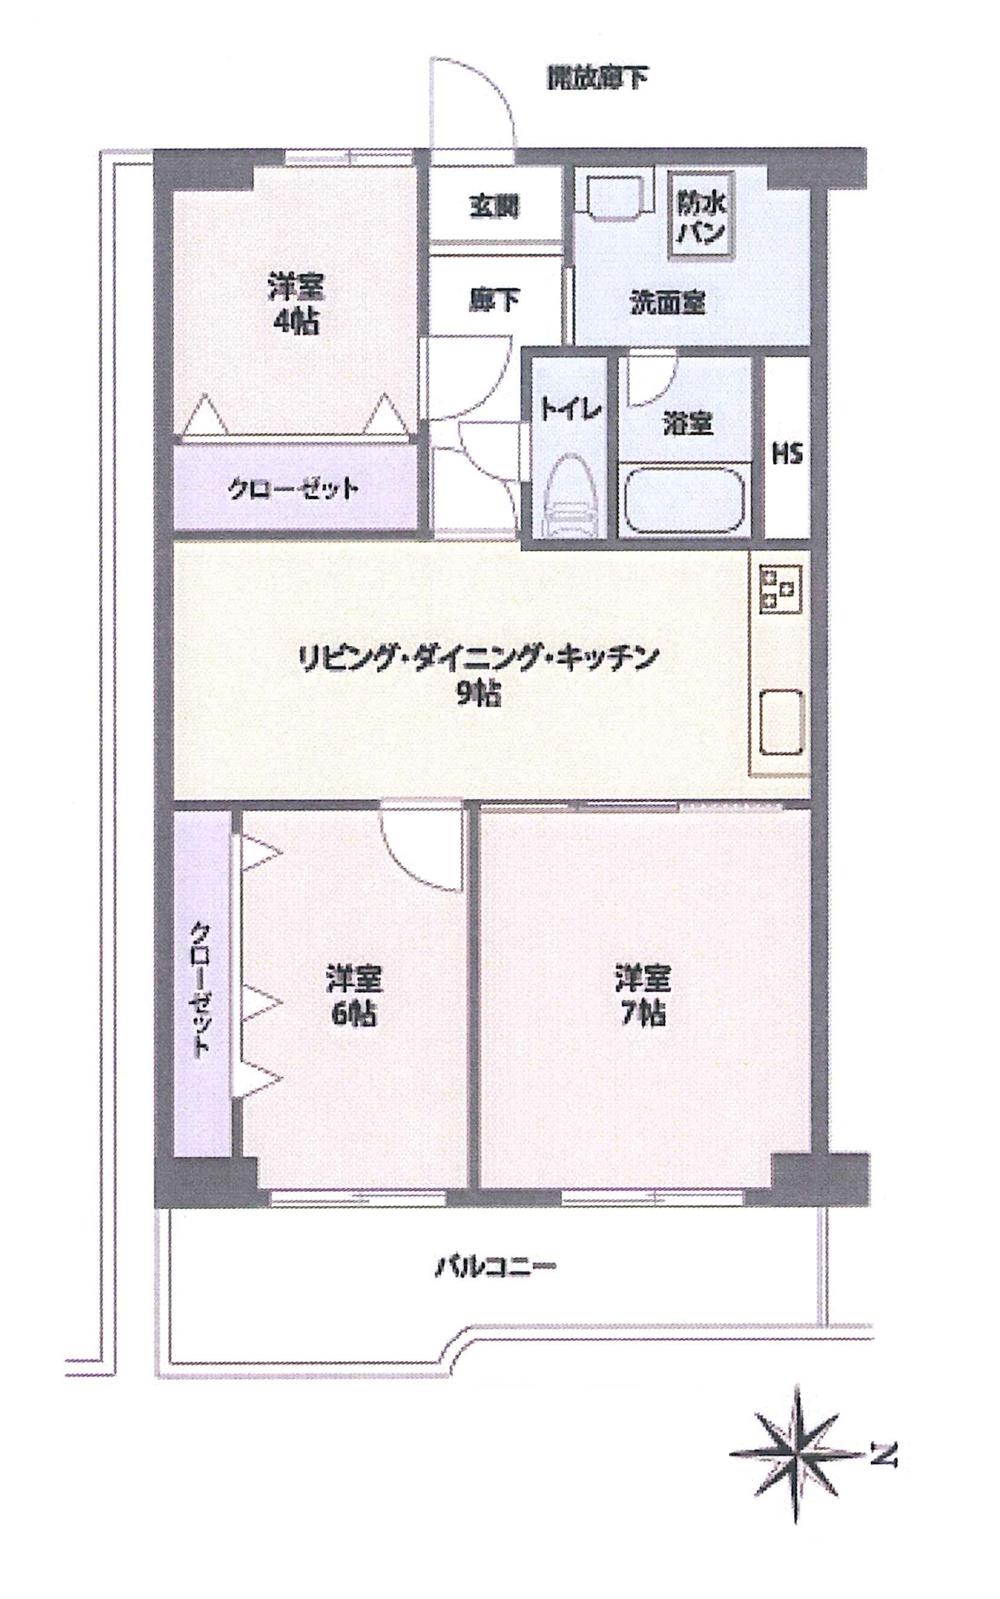 Floor plan. 3LDK, Price 15.8 million yen, Footprint 57.6 sq m , Balcony area 8 sq m family type of spacious 3LDK!